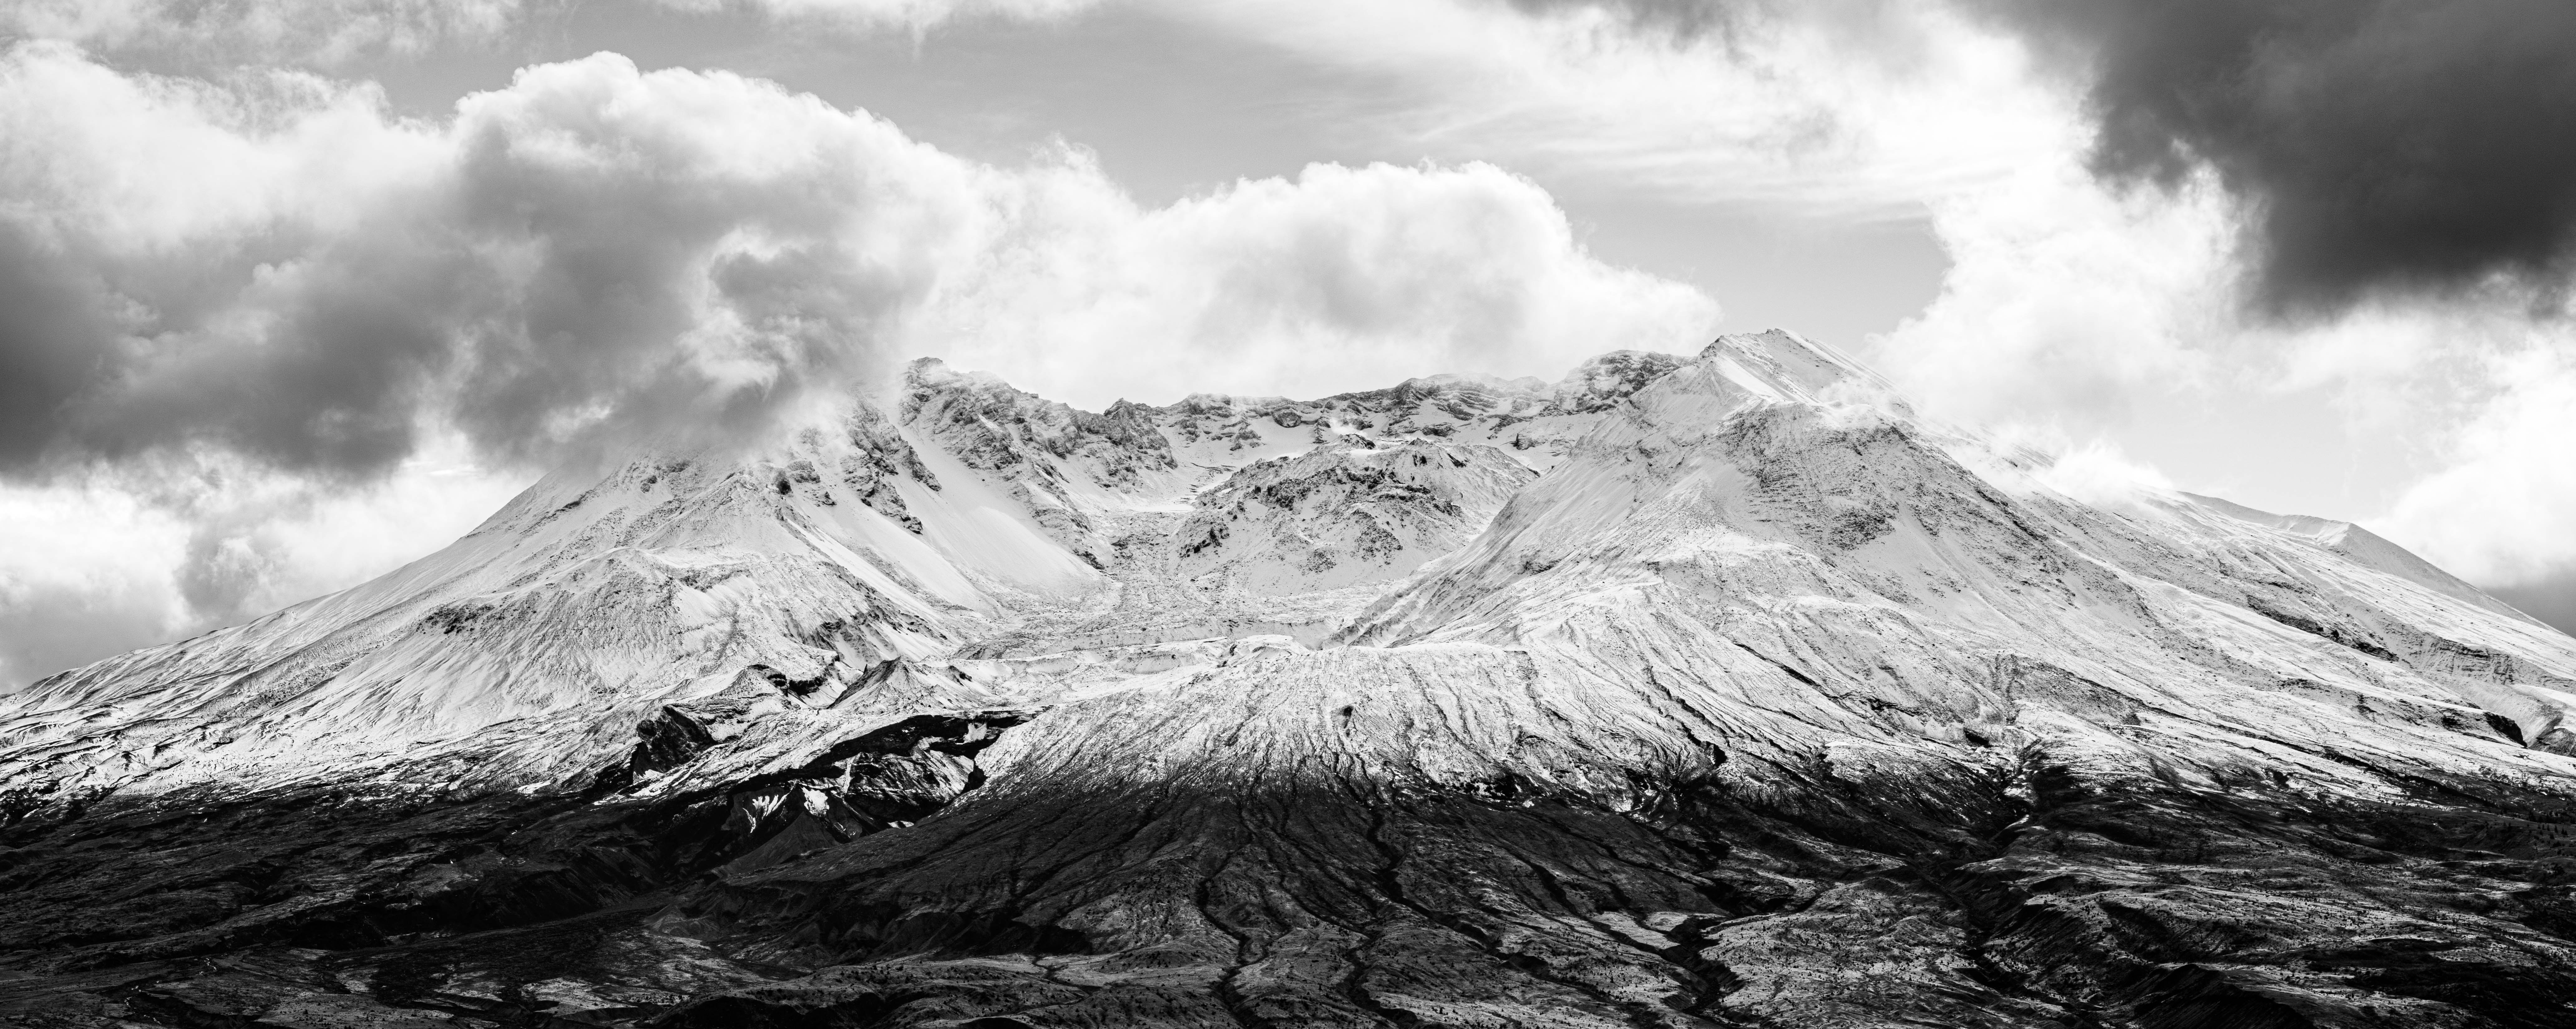 Mount Saint Helens .jpg